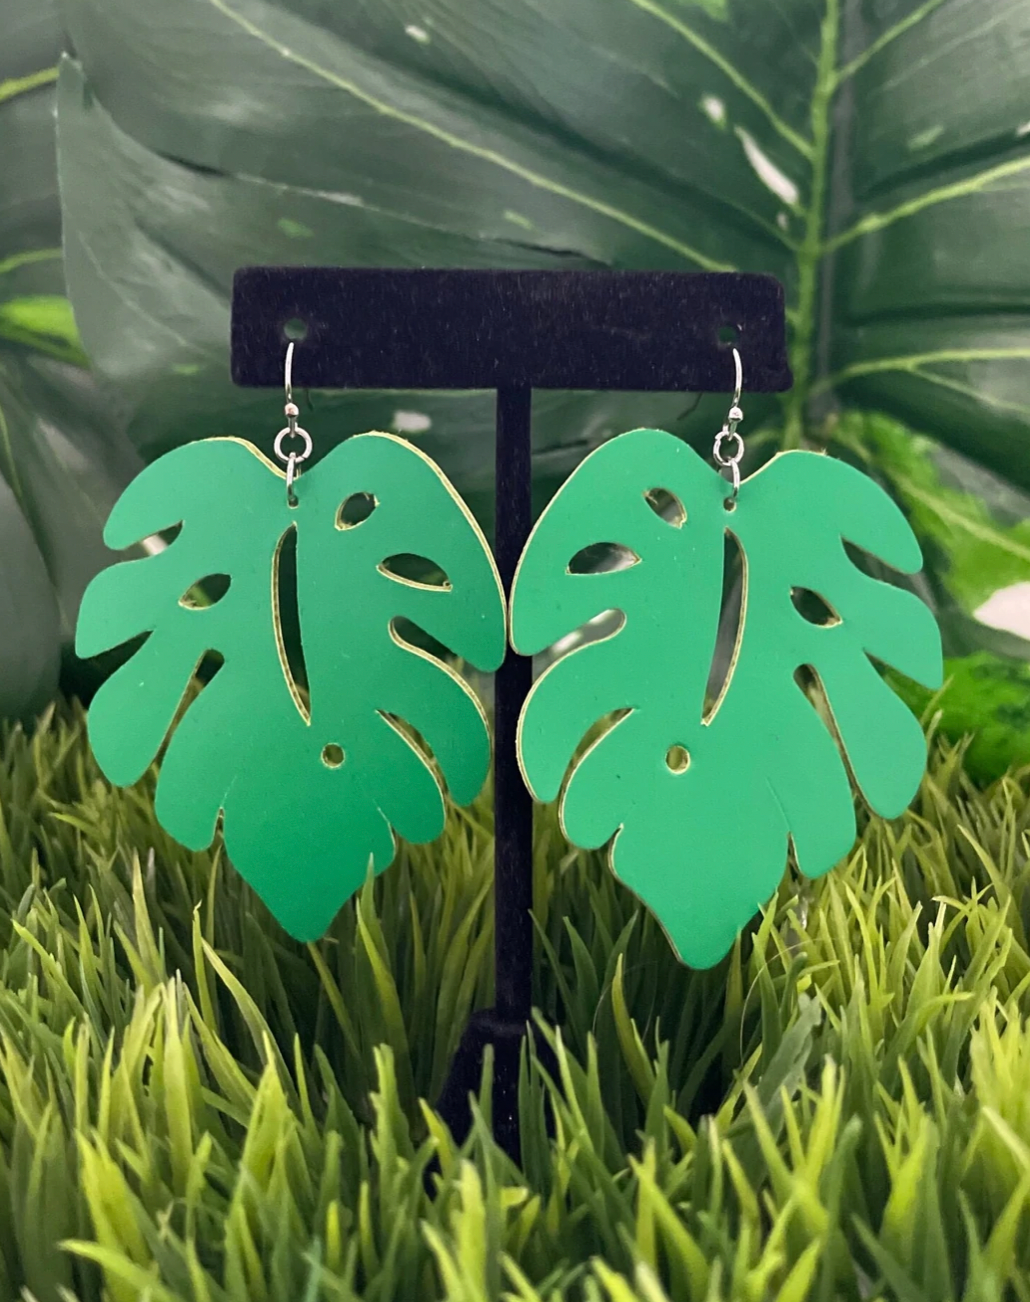 Big dangly simplistic green monstera earrings.